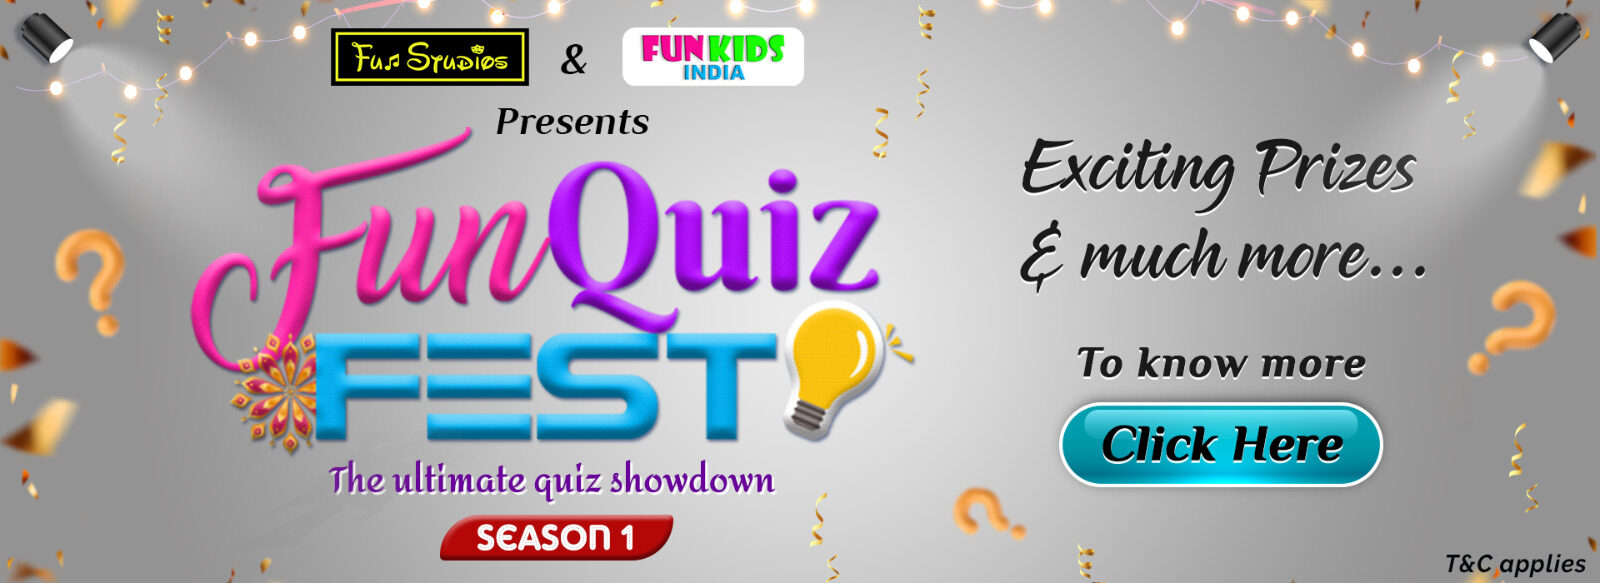 fun quiz fest web-banner